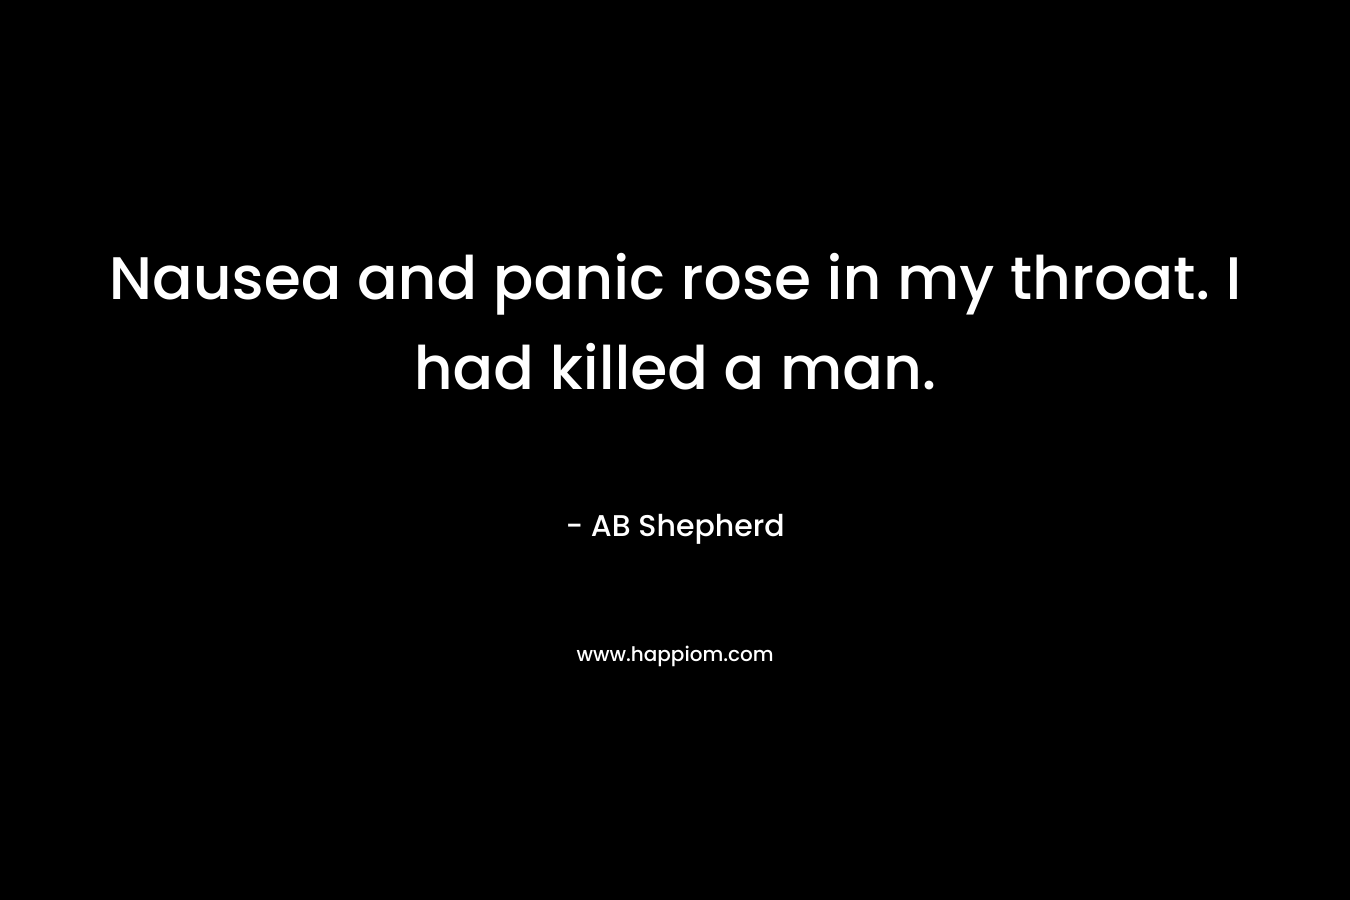 Nausea and panic rose in my throat. I had killed a man. – AB Shepherd